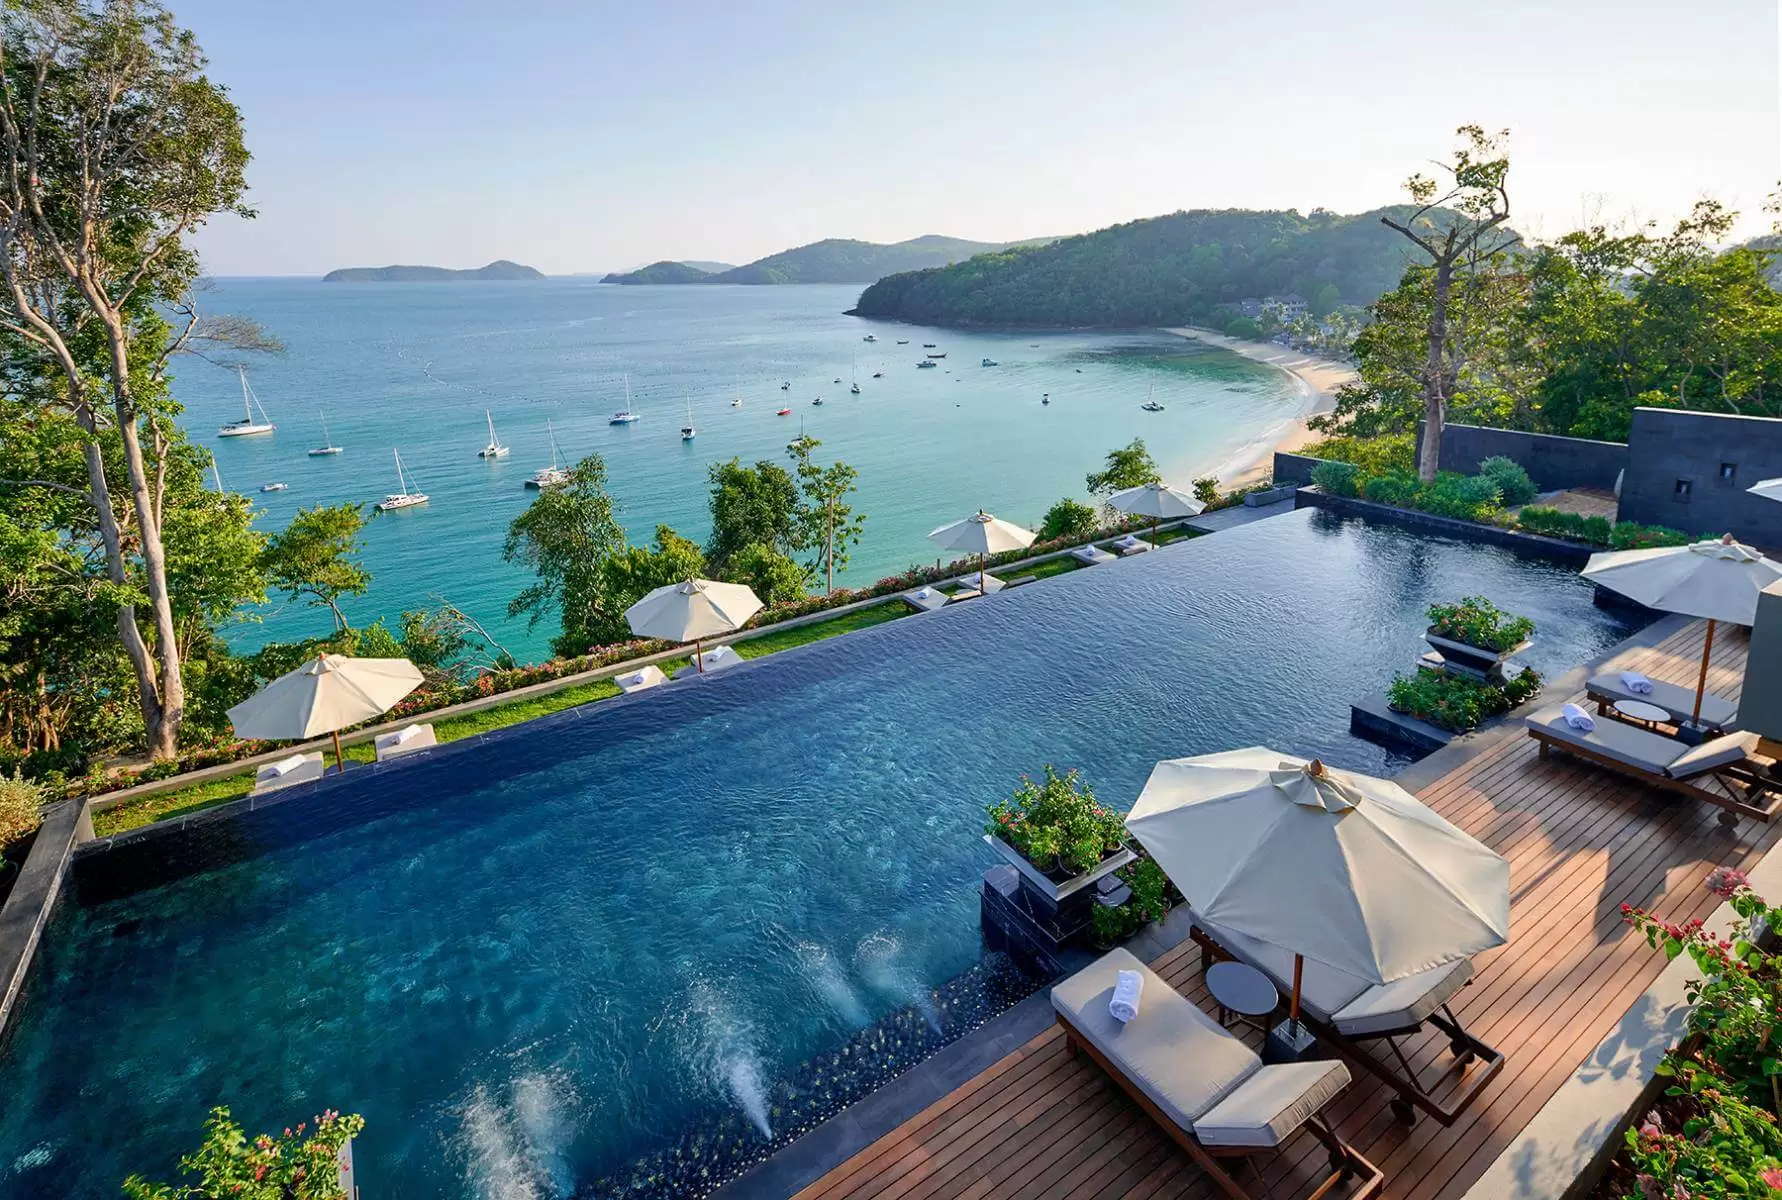 Phuket: Resort Town & Great Investment